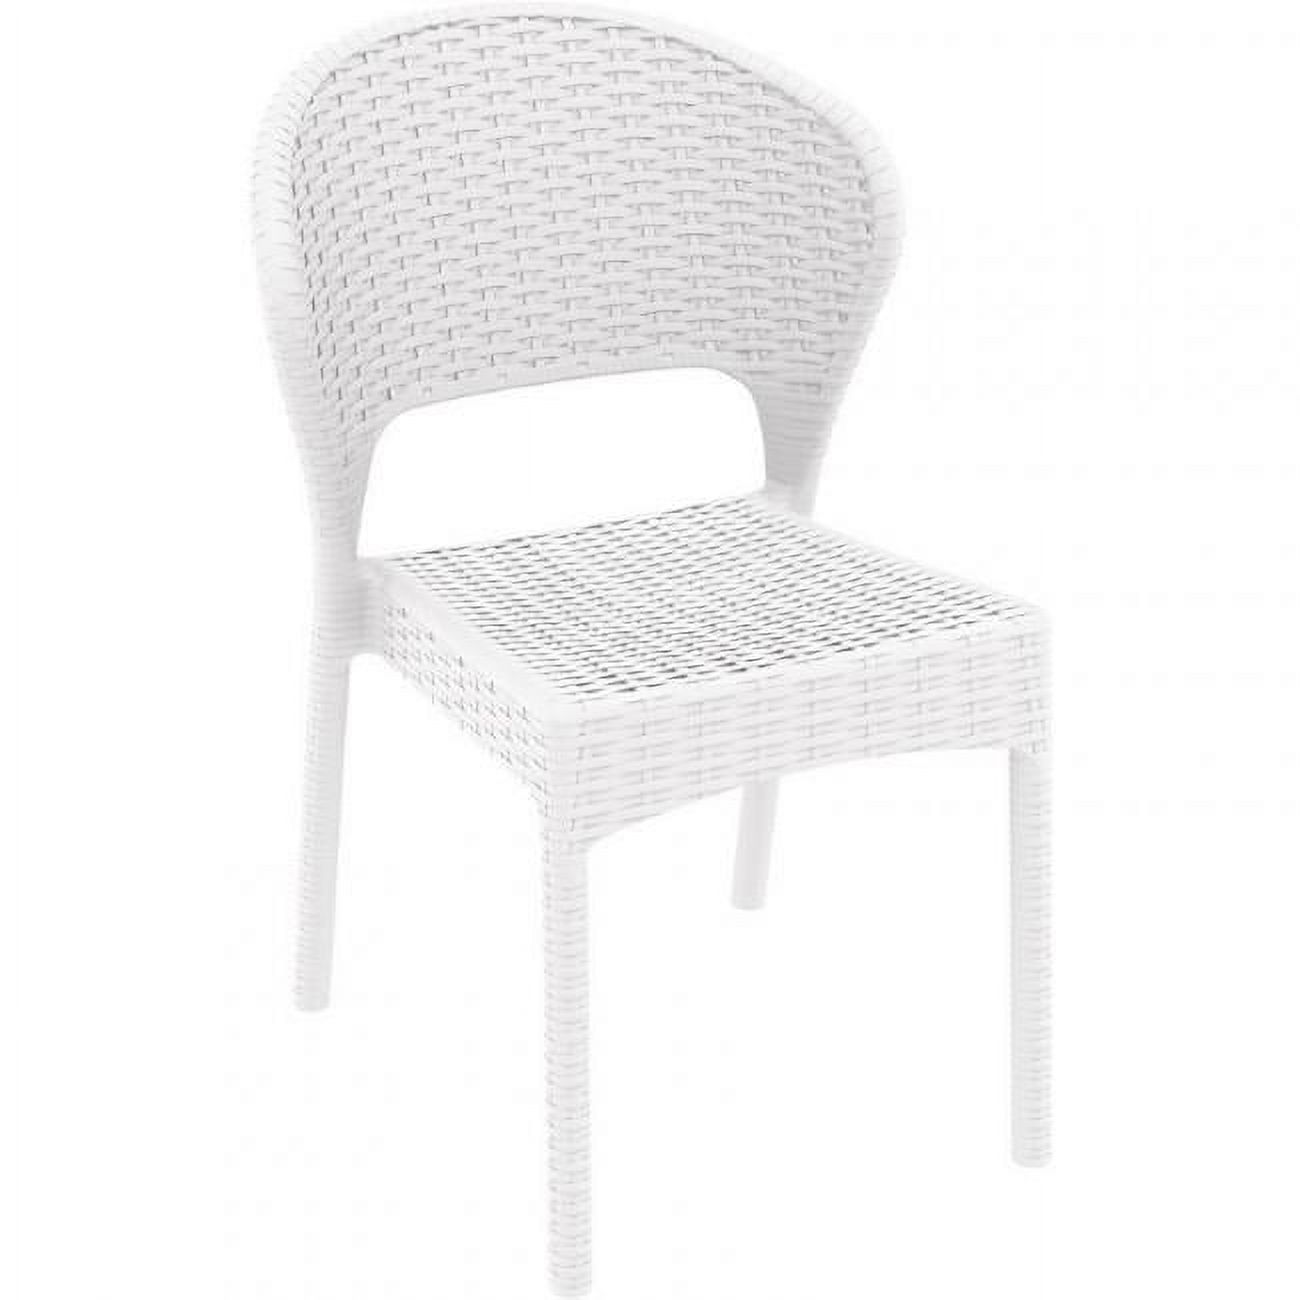 Siesta Daytona Resin Wickerlook Set of 2 Dining Chair White ISP818-WH - image 1 of 9